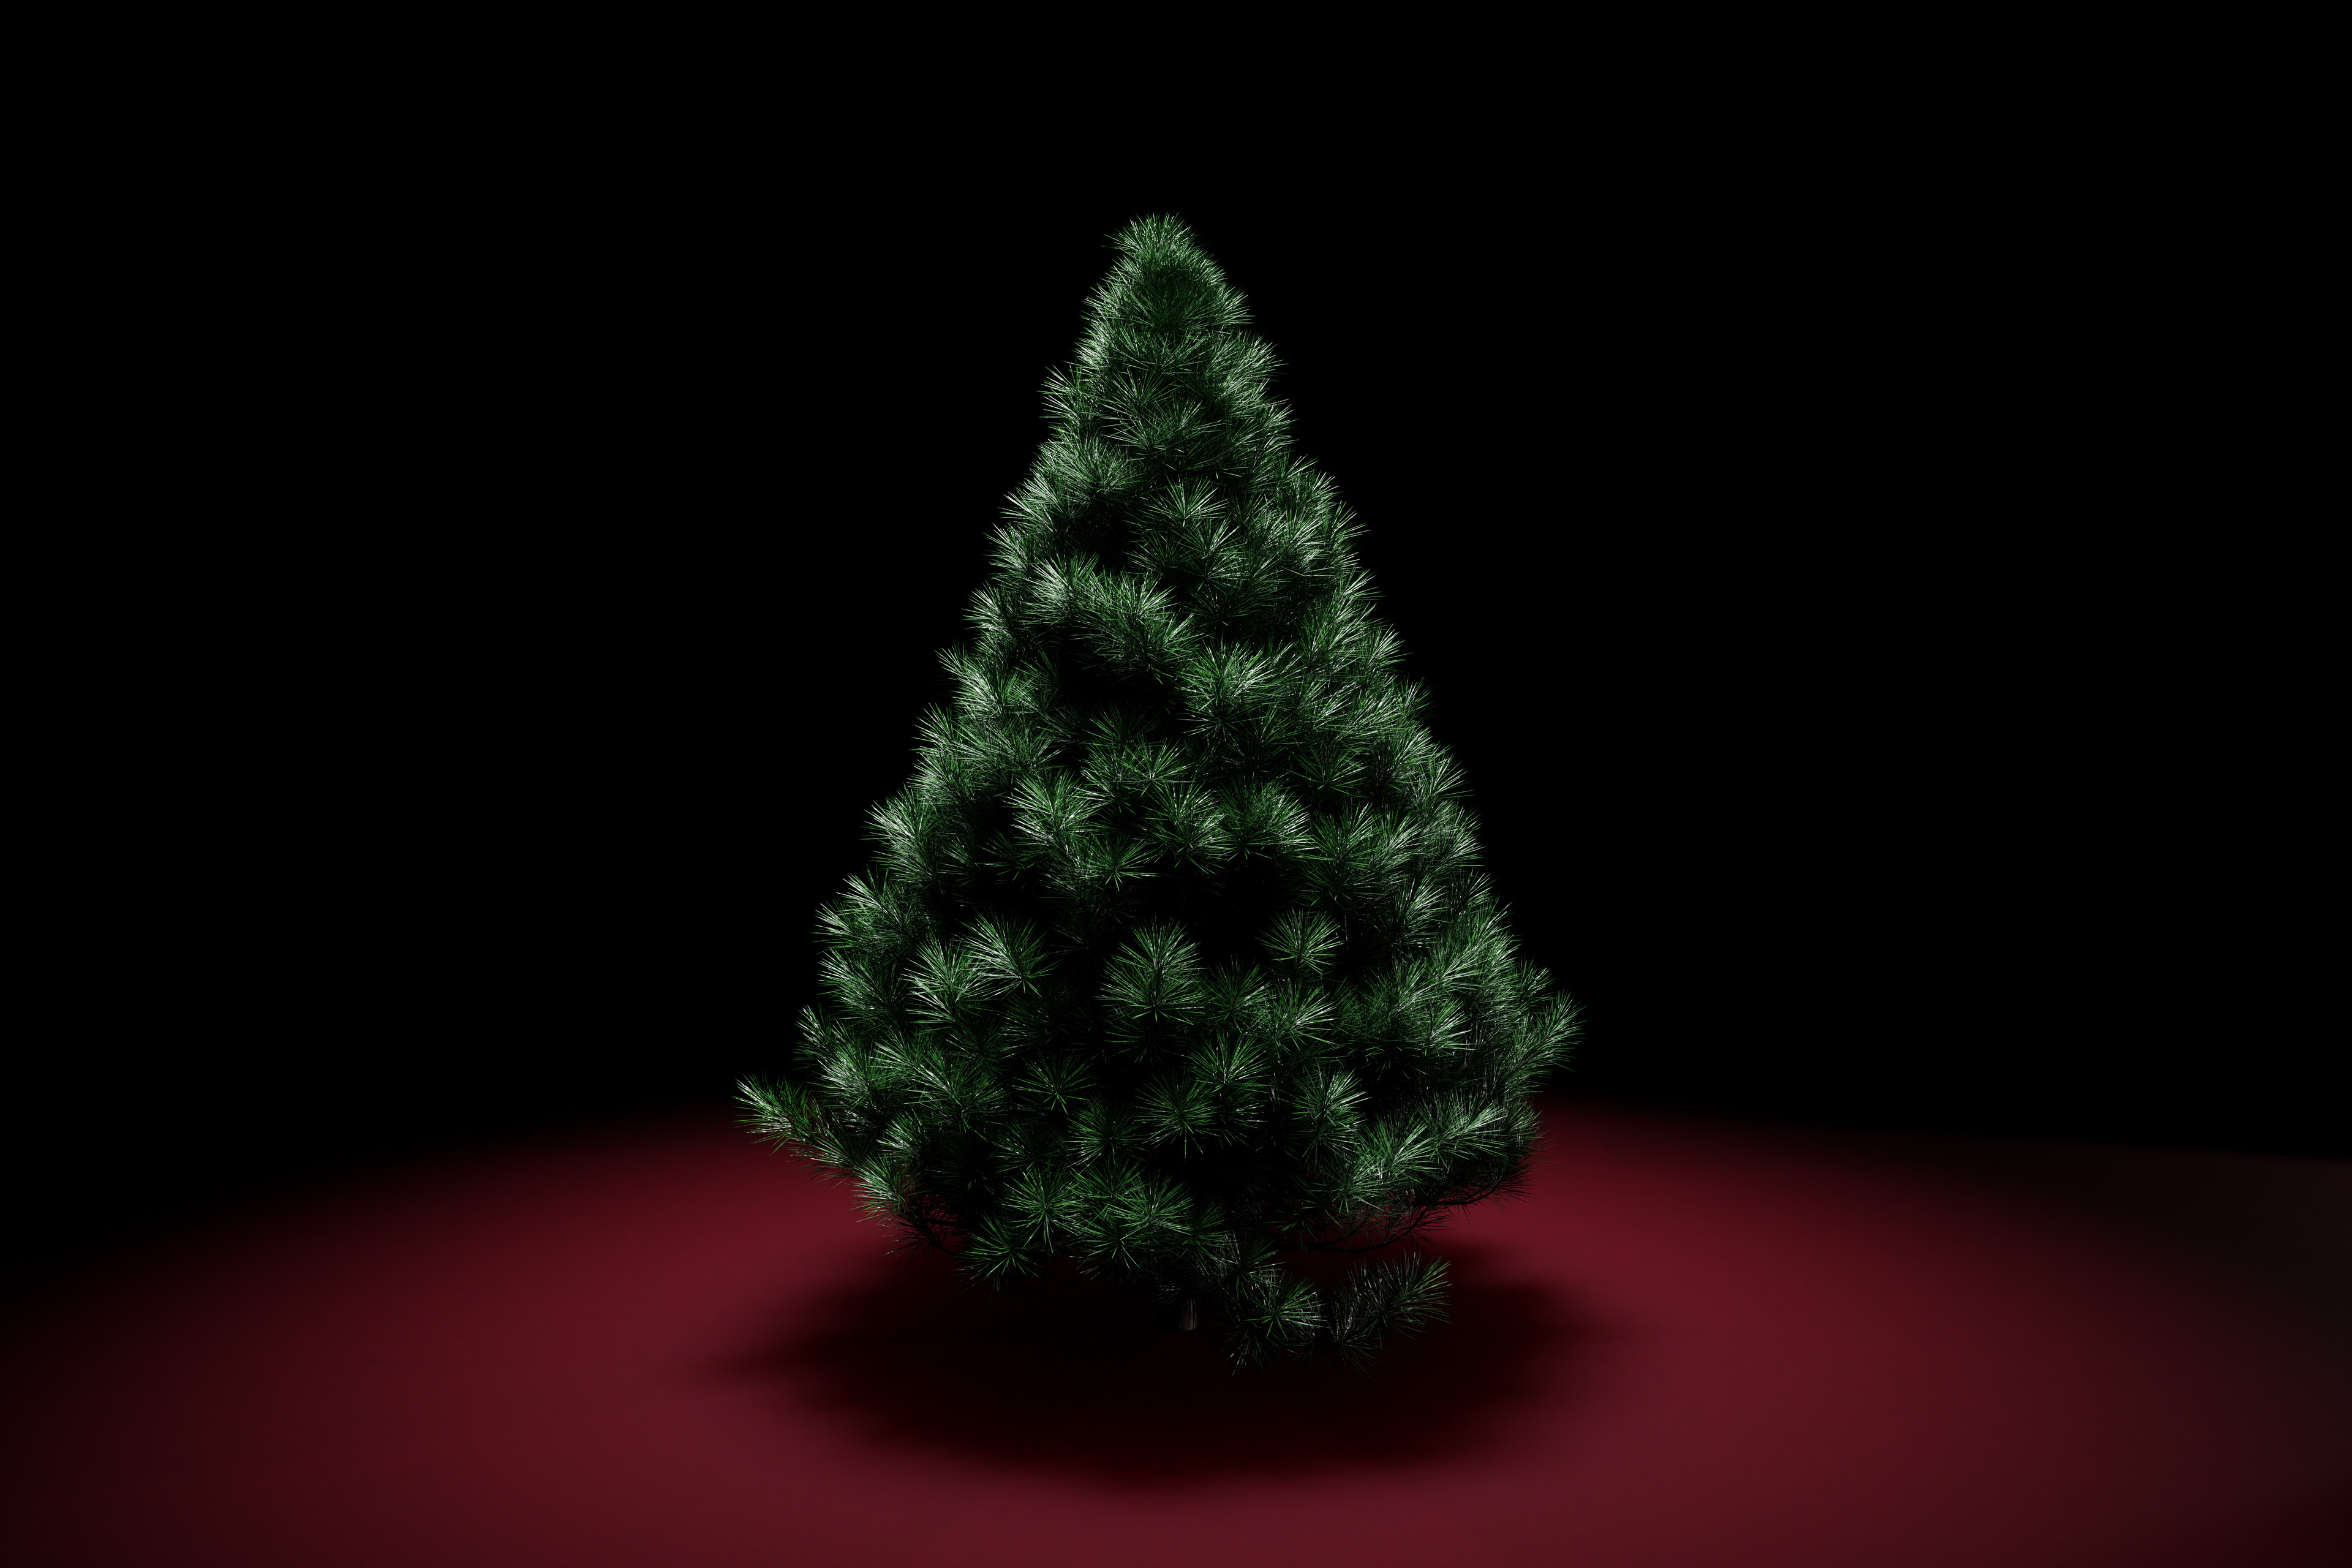 a pine